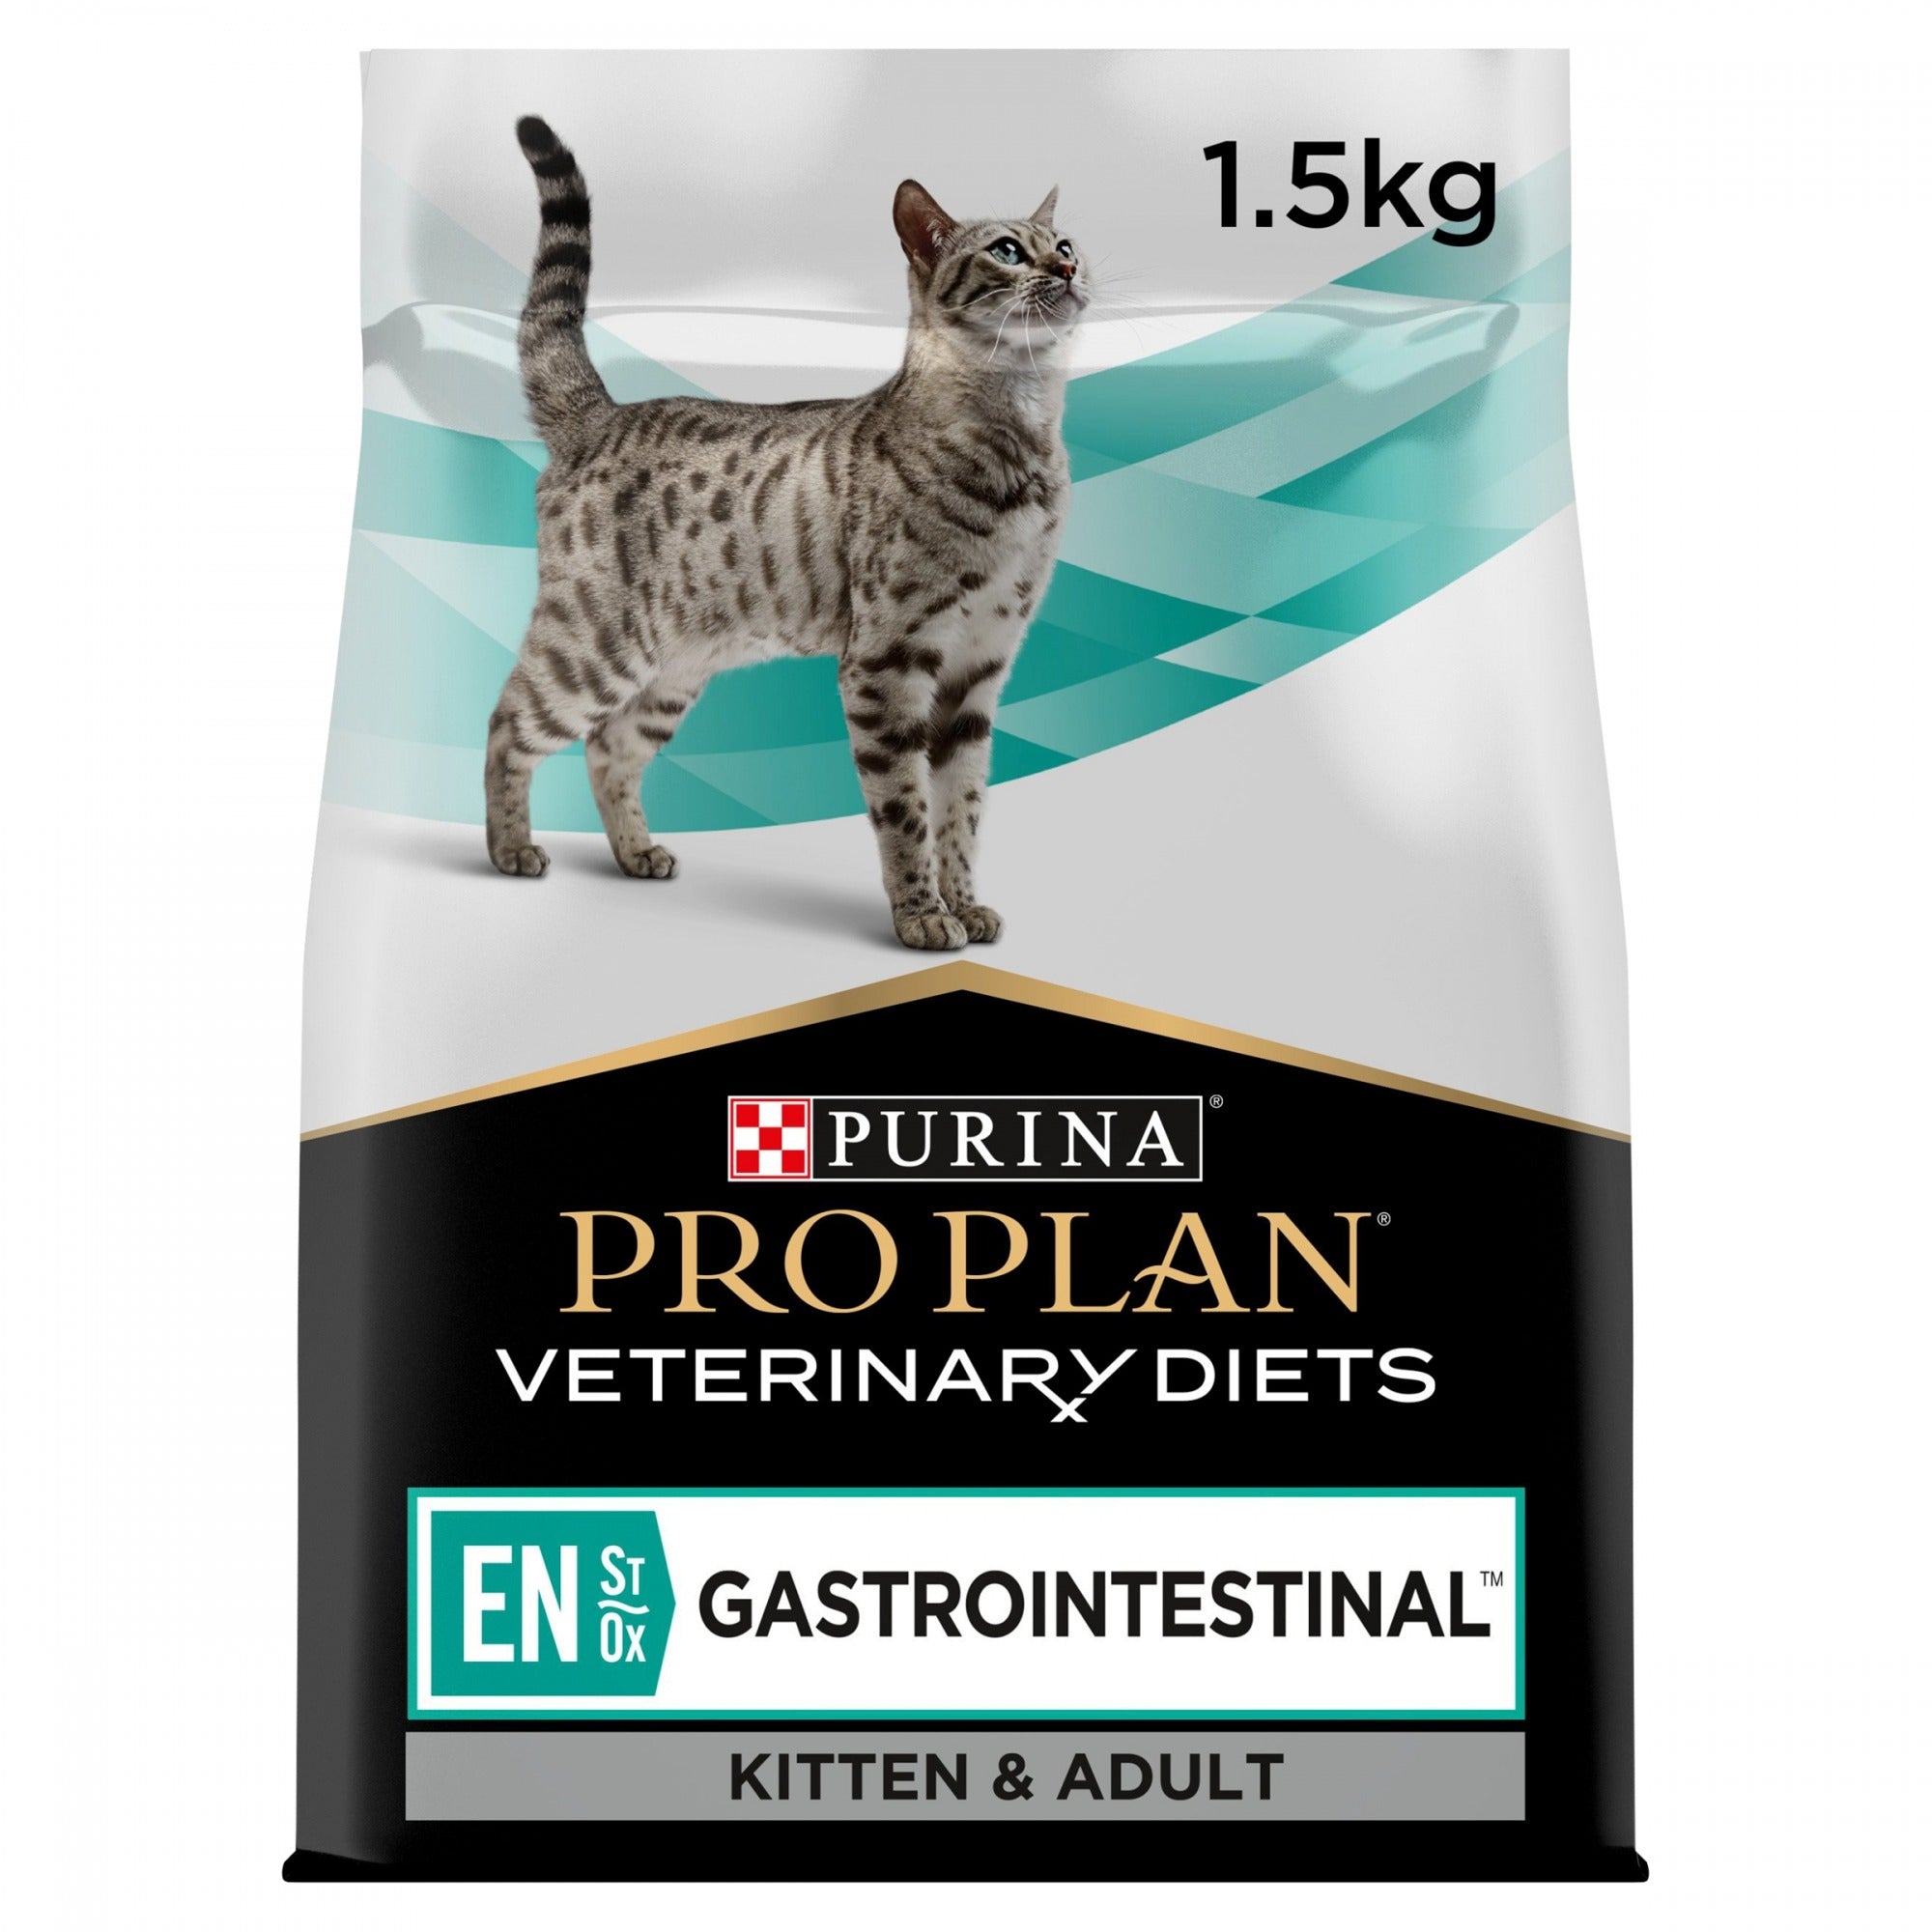 PRO PLAN VETERINARY DIETS EN Gastrointestinal Dry Cat Food